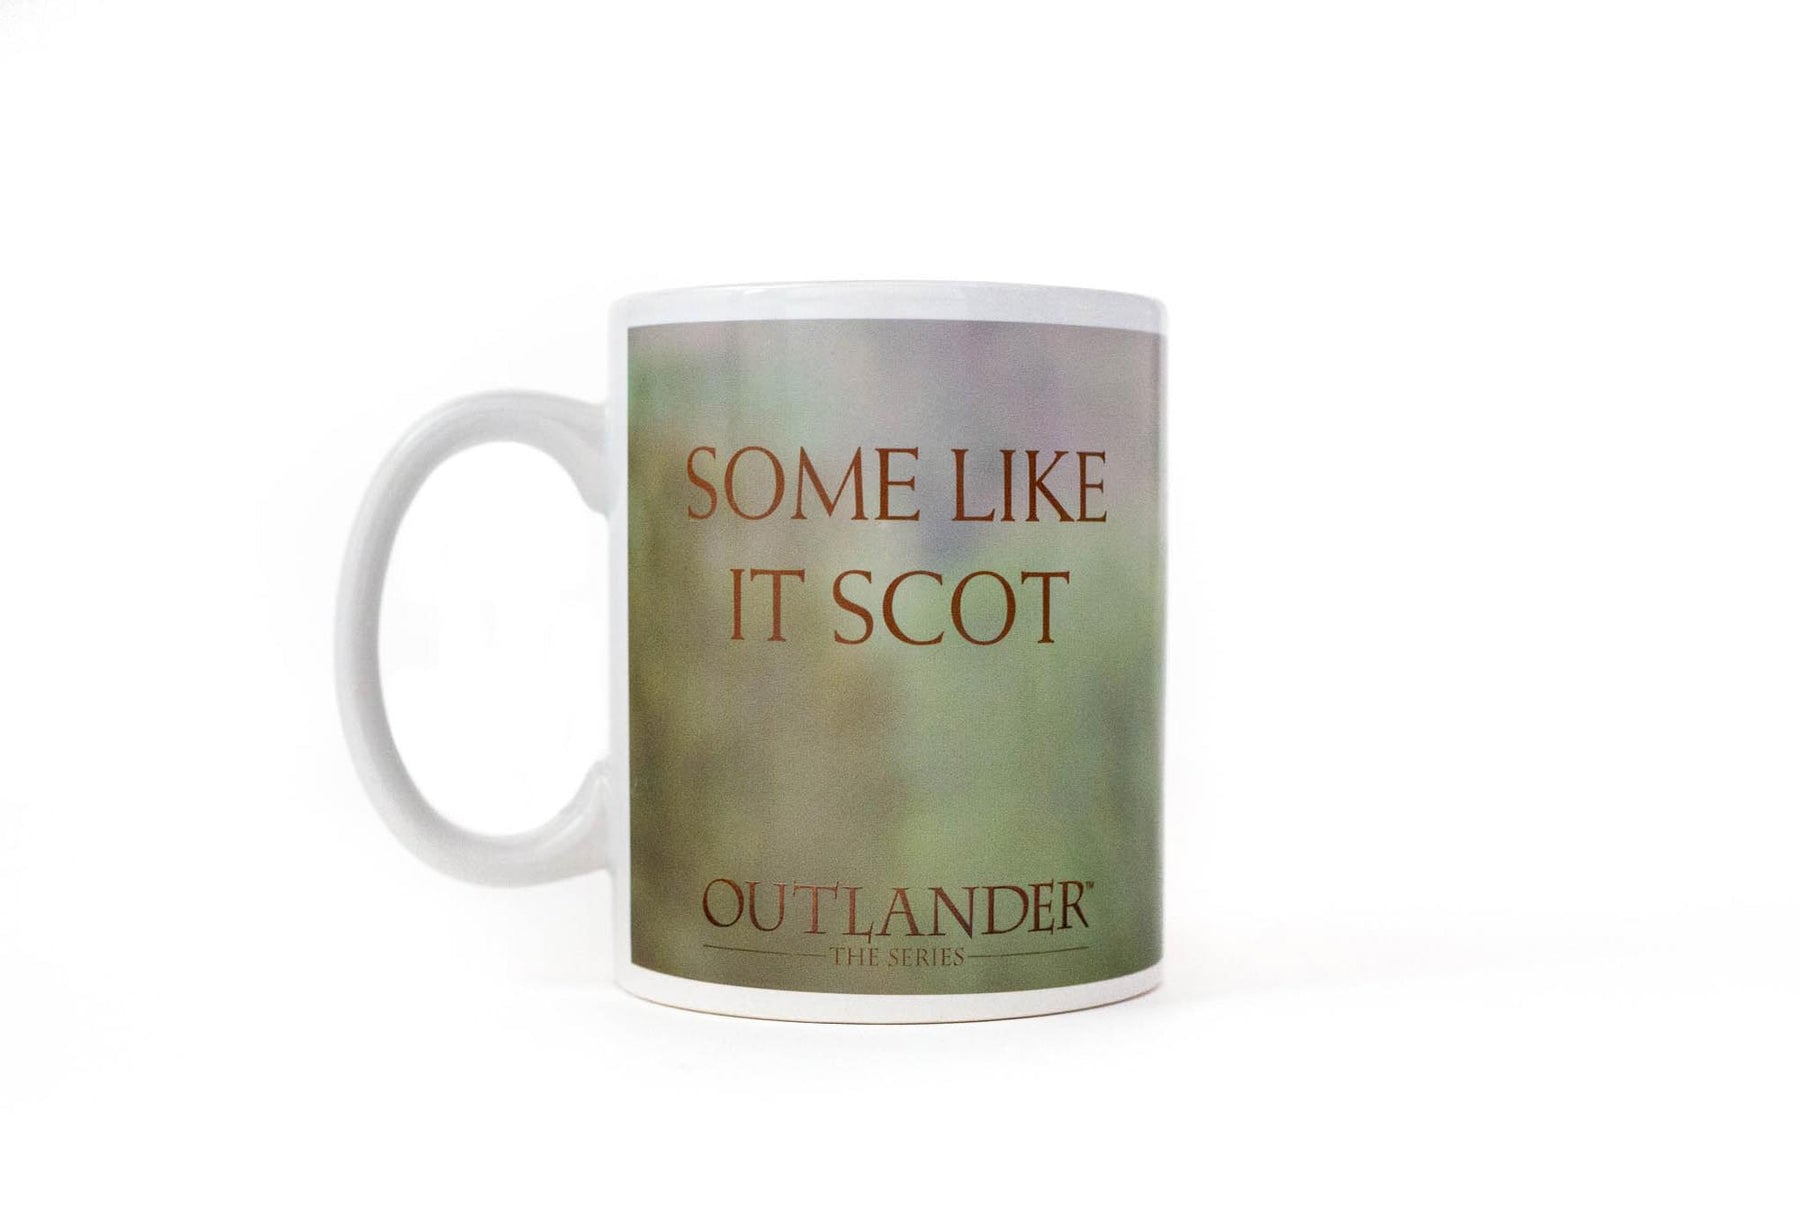 Outlander Jamie "Some Like It Scot" 16oz Ceramic Coffee Mug for Home & Office